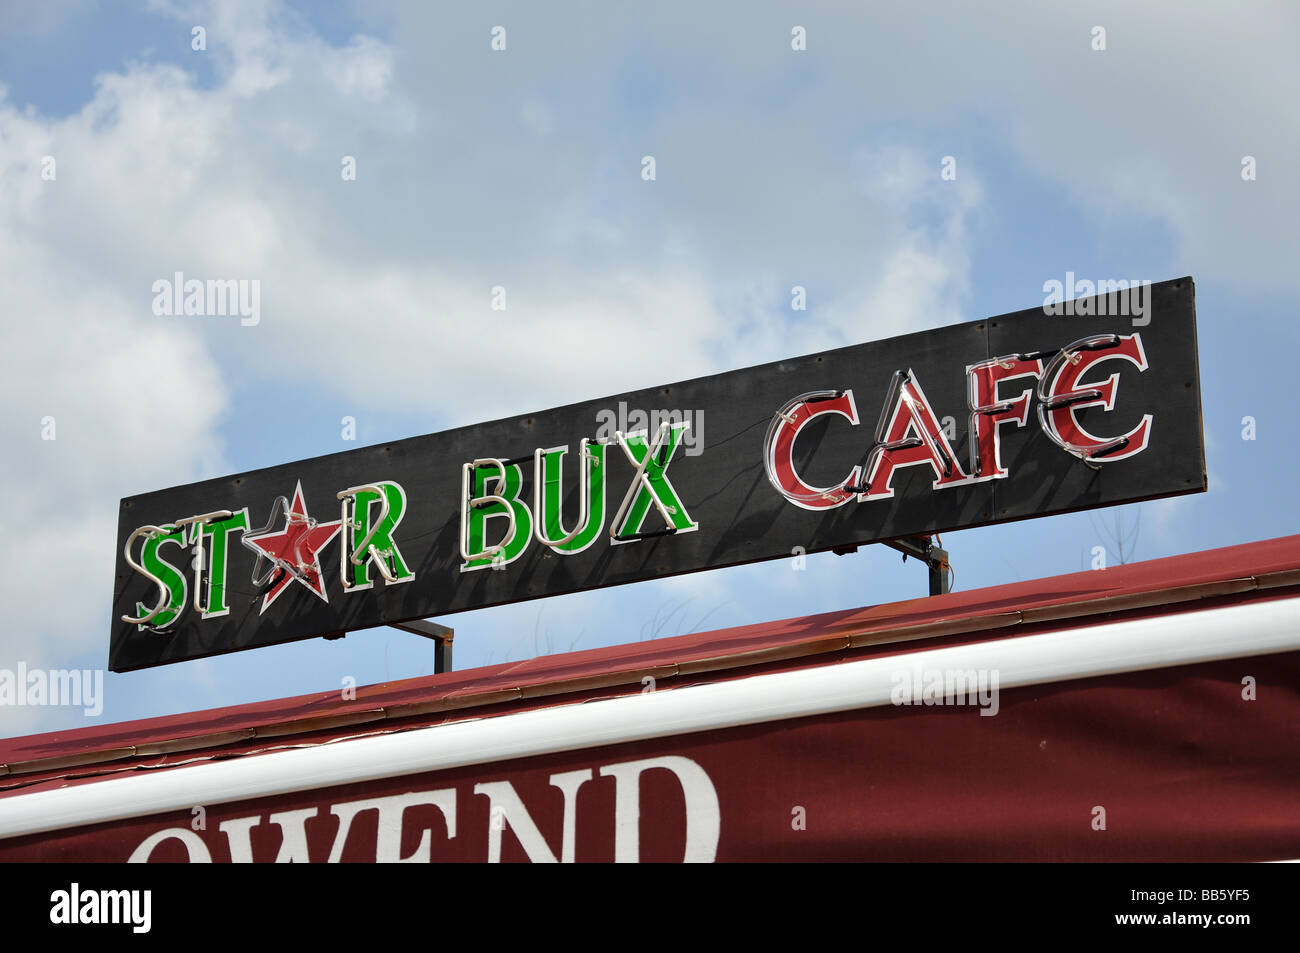 Stella Bux Cafe, Marmaris, Datca Peninsula, Provincia Mulga, Turchia Foto Stock